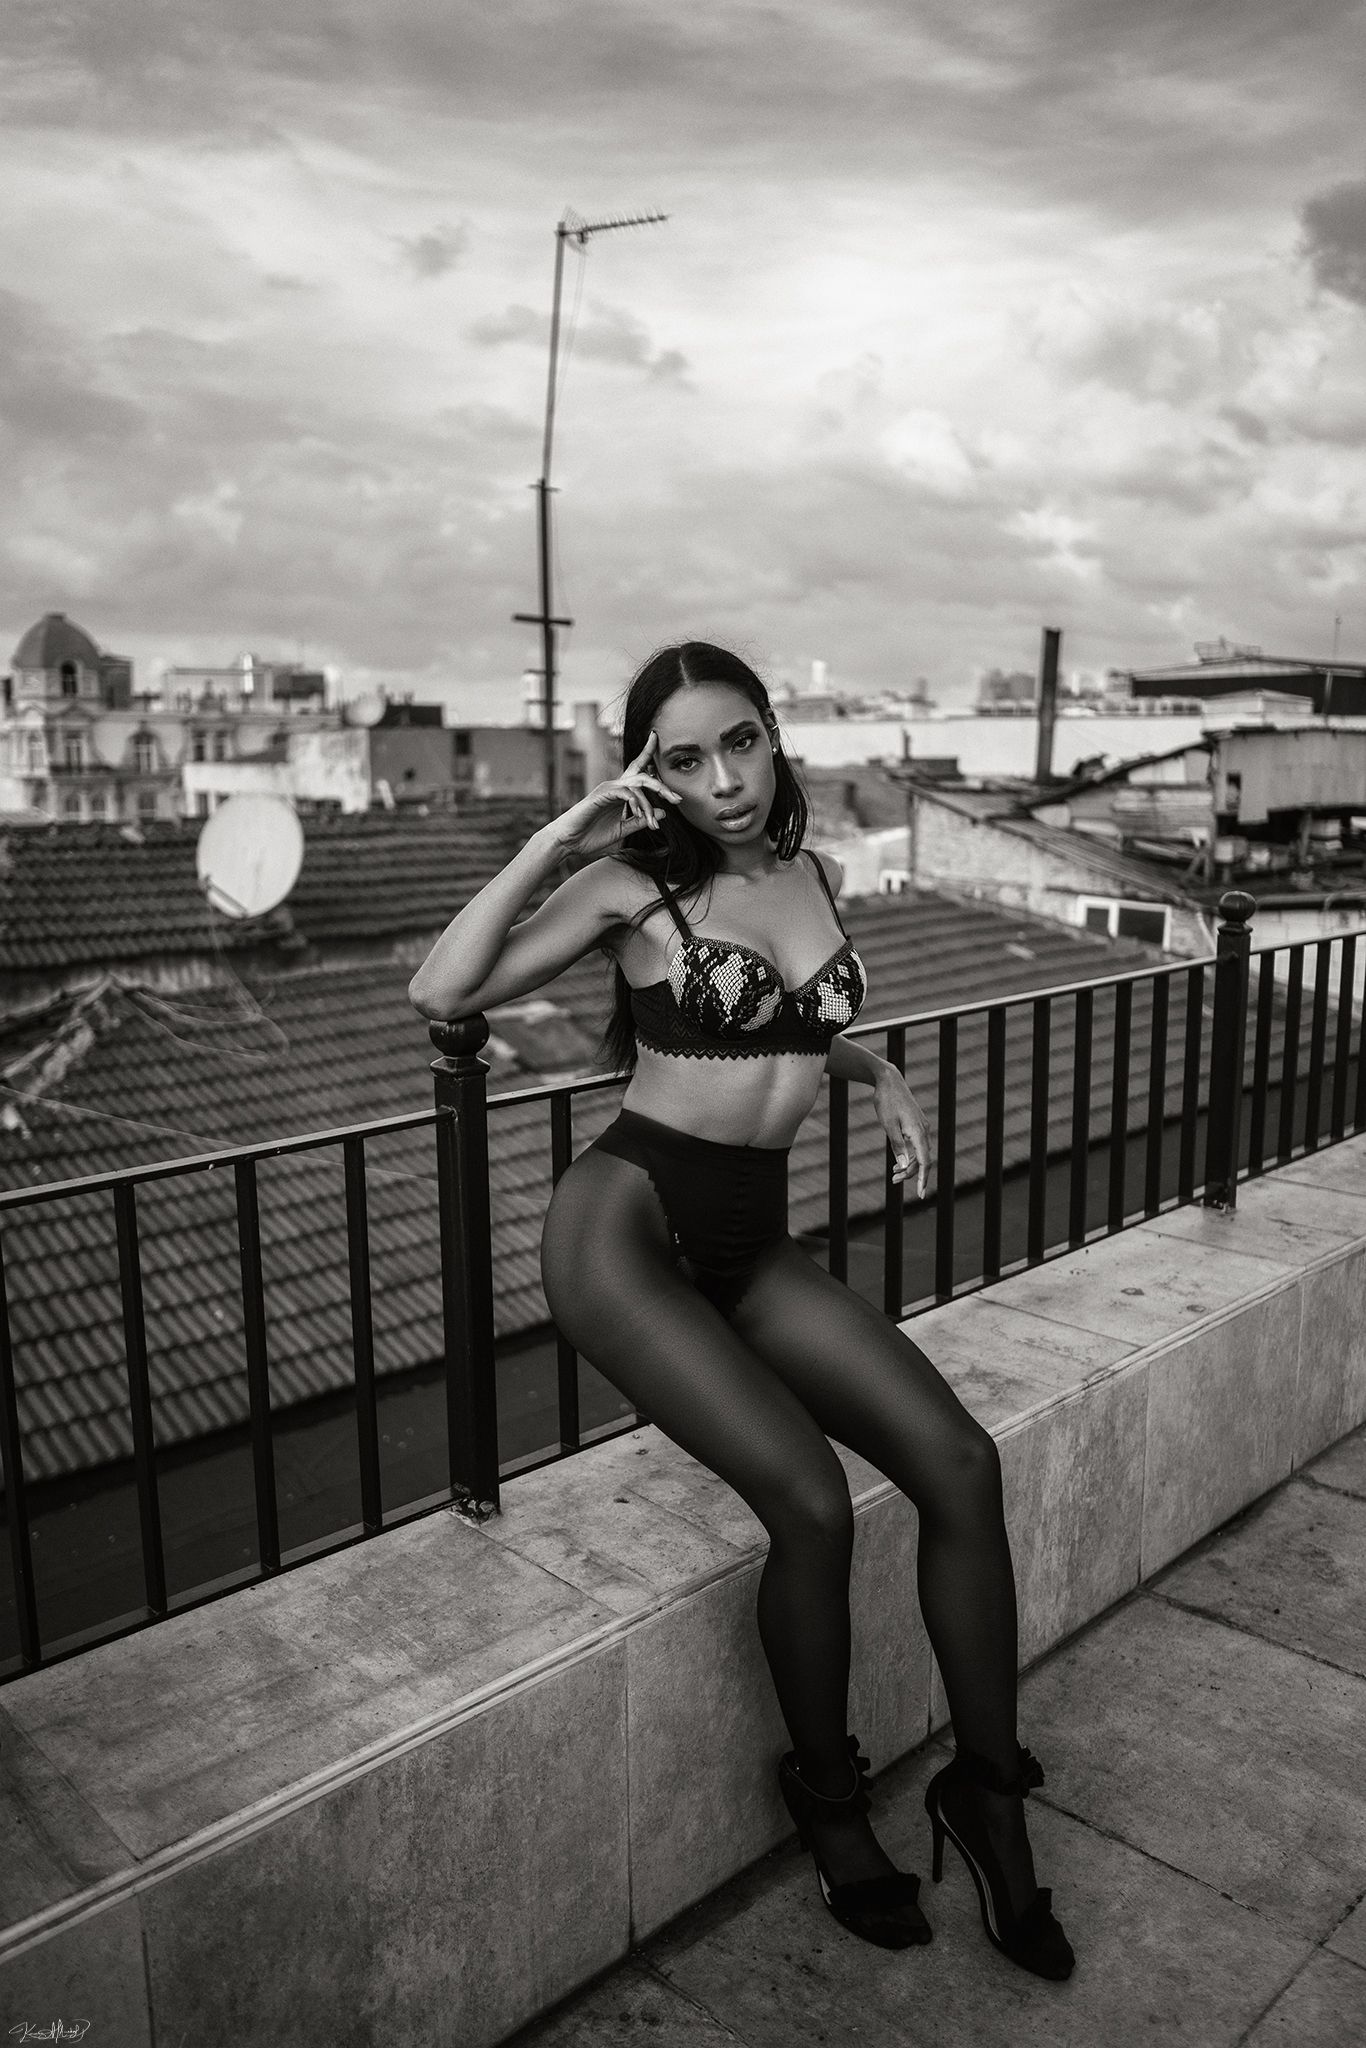 Erotic fashion photography black and white body